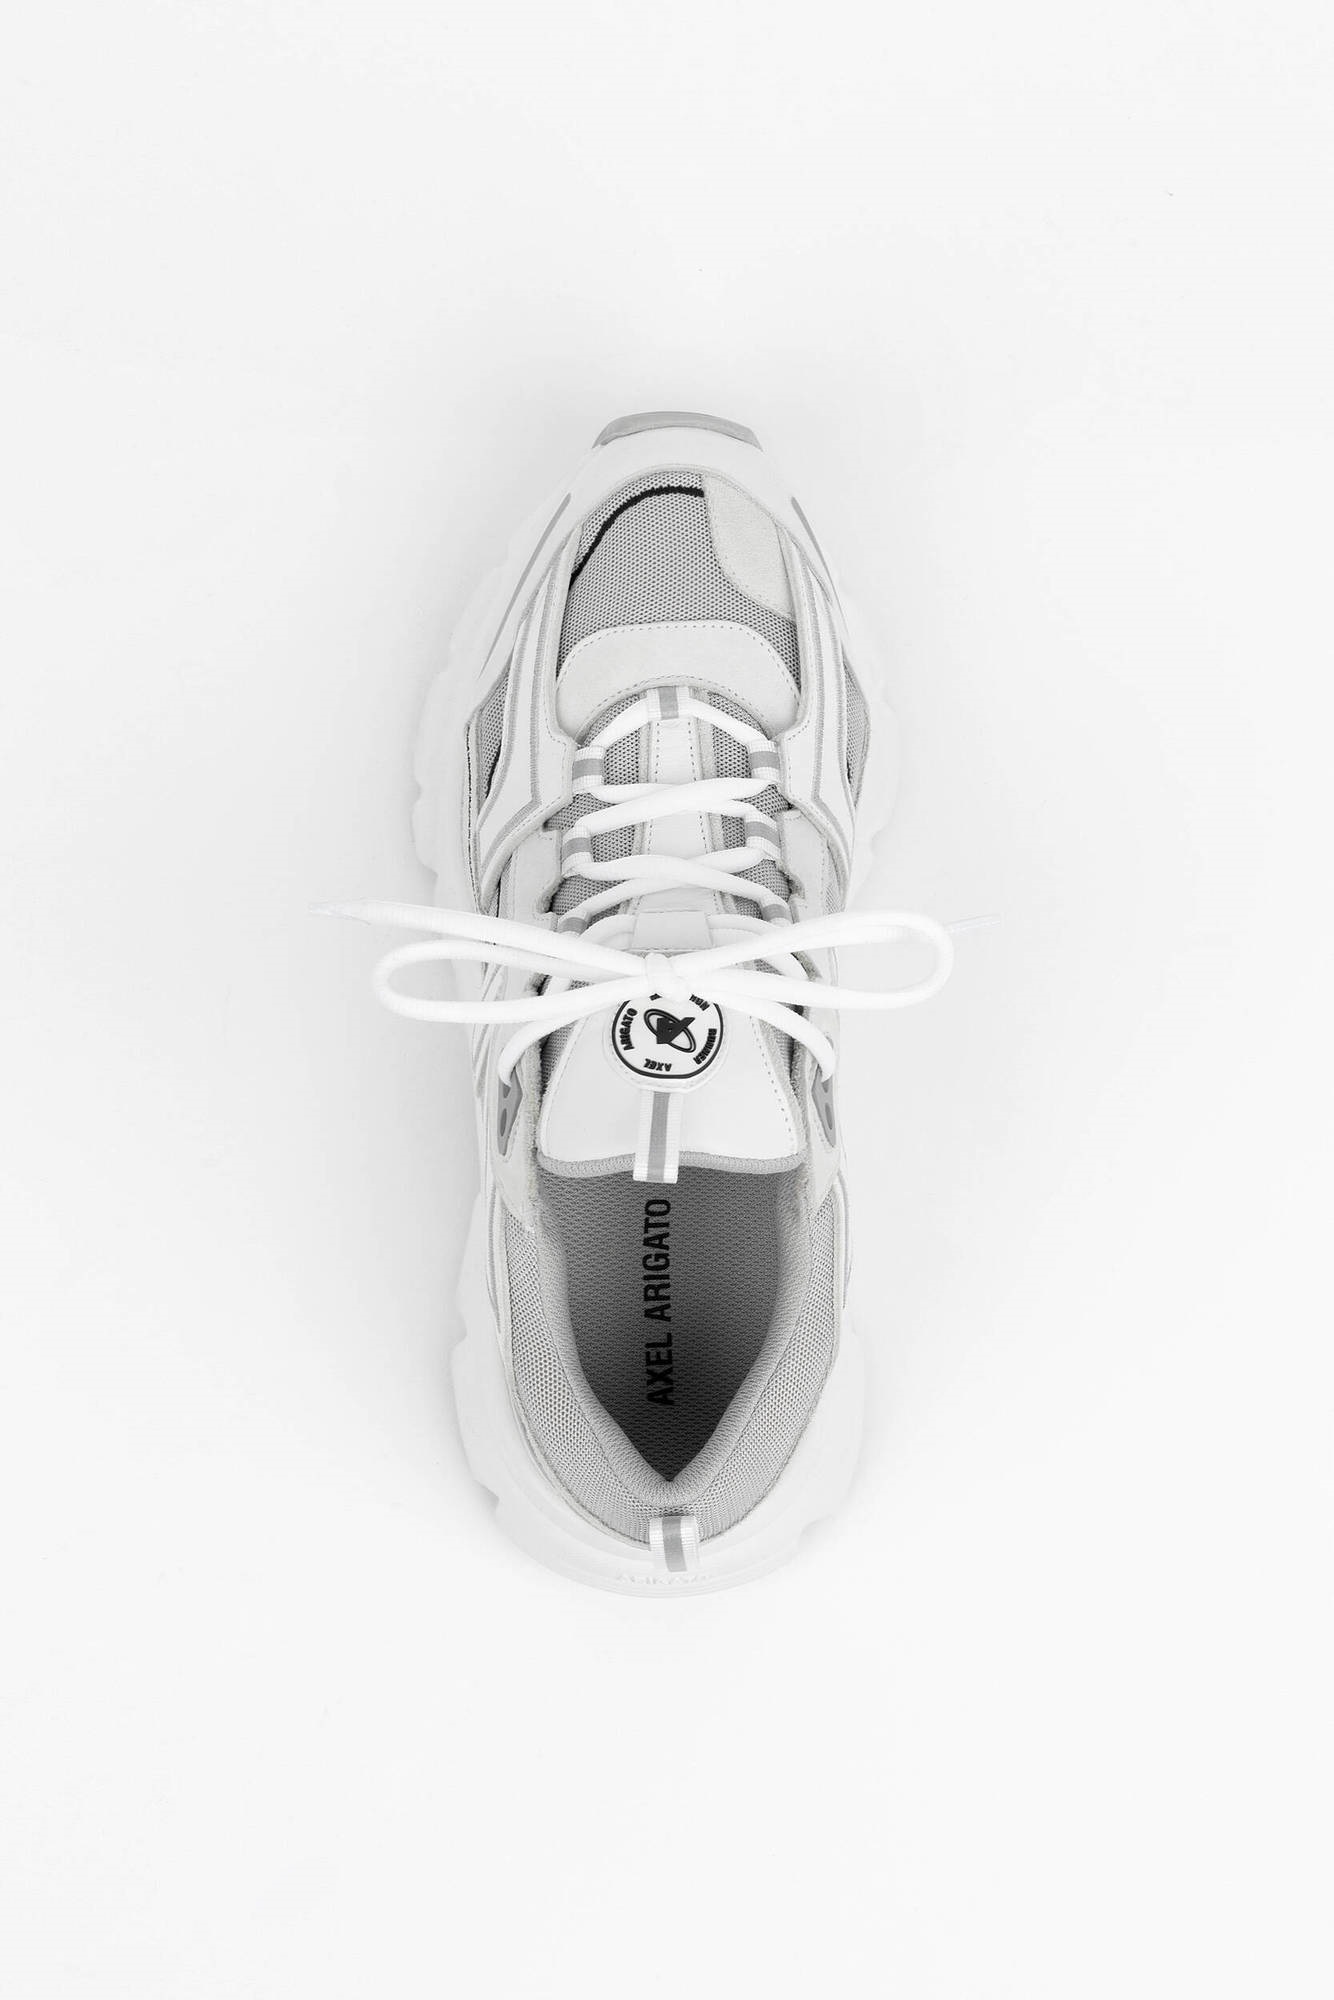 AXEL ARIGATO Marathon R-Trail Sneaker in White 42